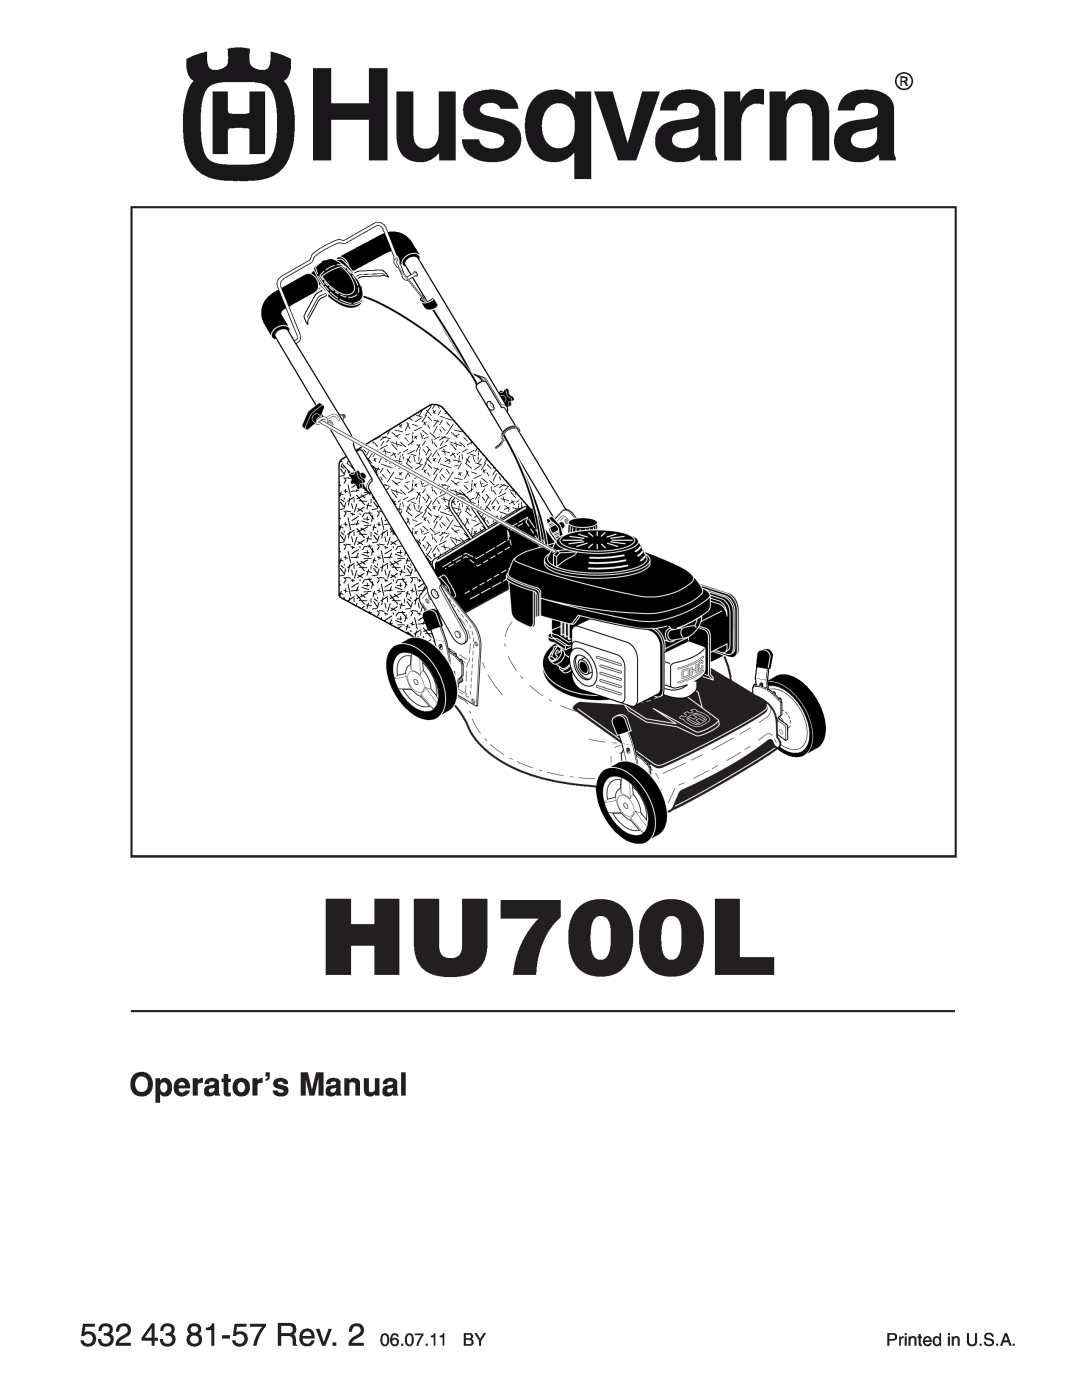 Husqvarna 961430097 manual Operator’s Manual, HU700L, 532 43 81-57 Rev. 2 06.07.11 BY 